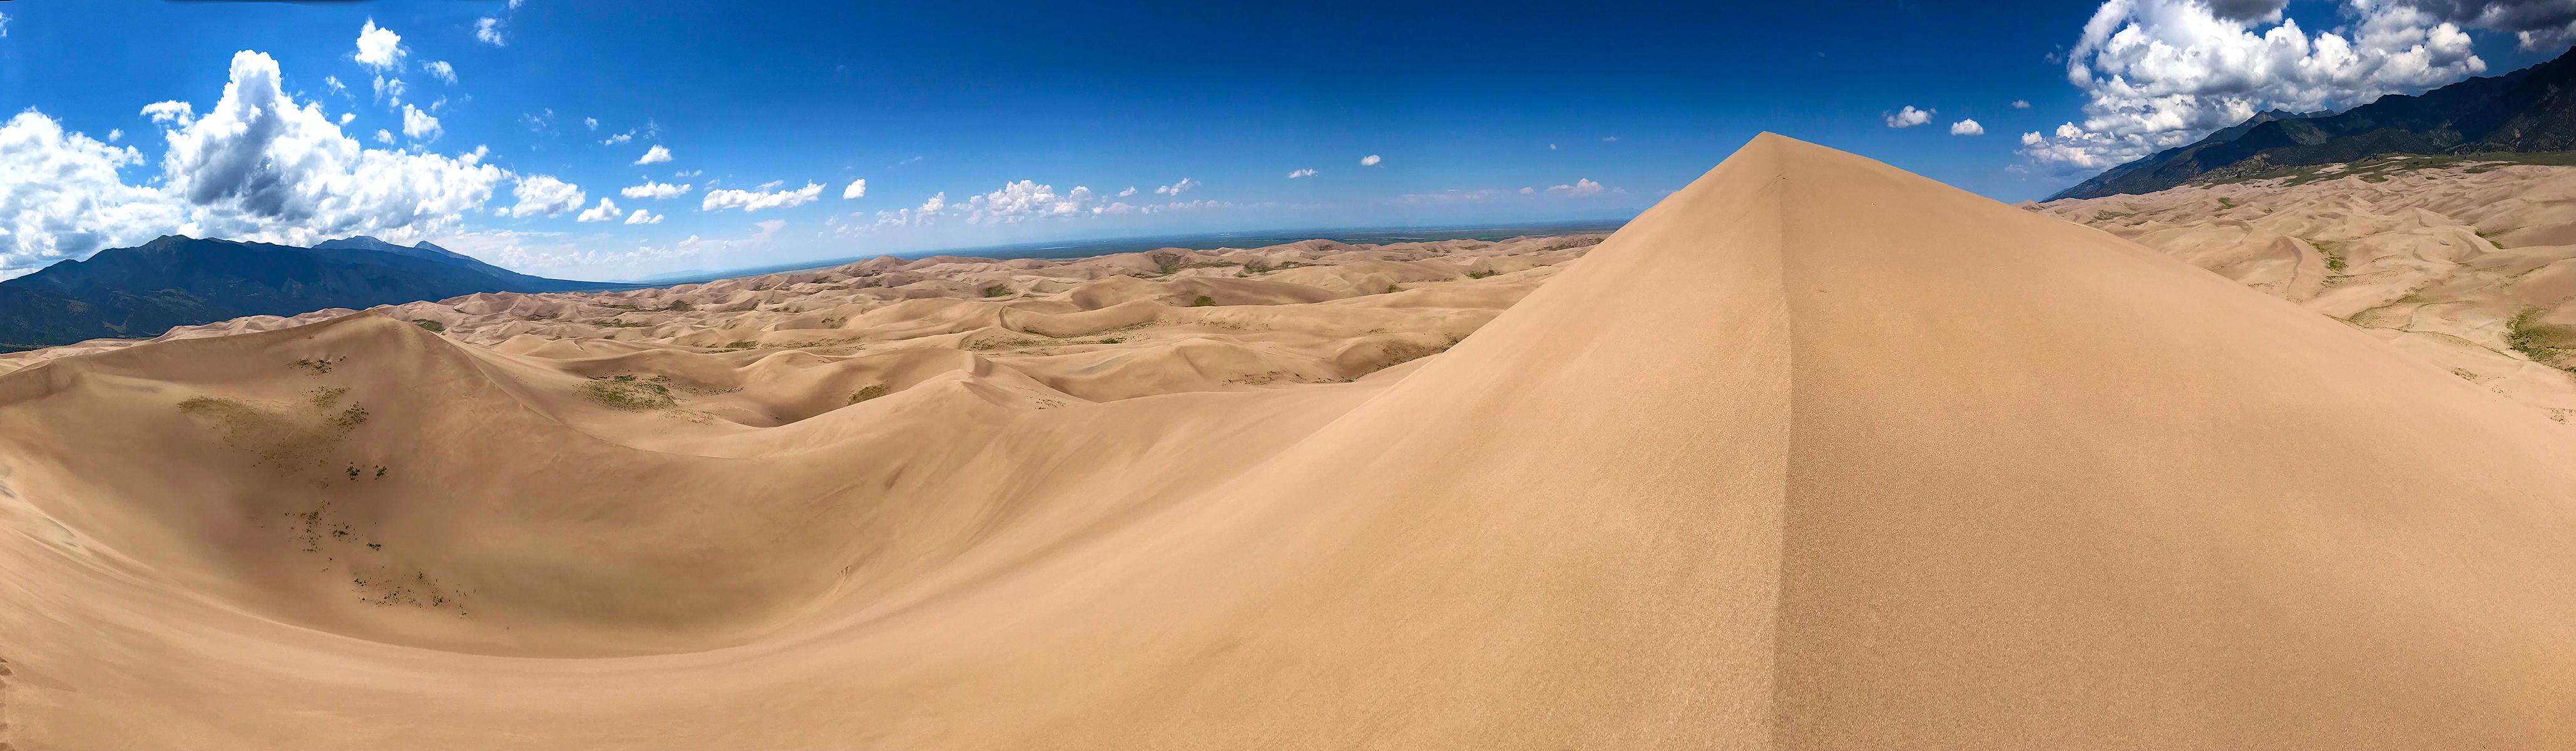 Great Sand Dunes National Park & Preserve (U.S. National Park Service)